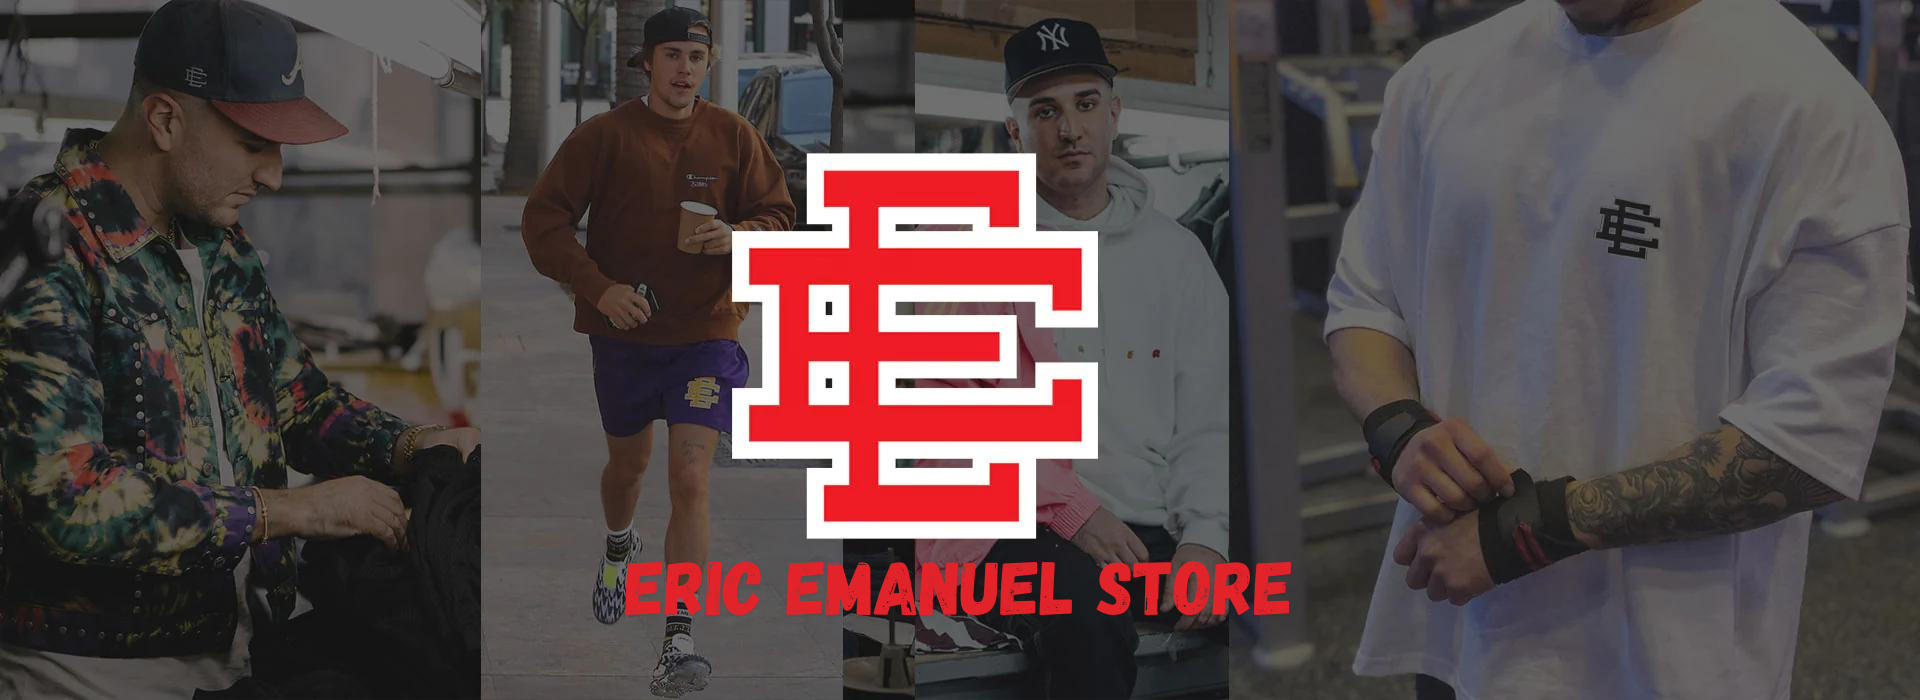 Eric Emanuel Store